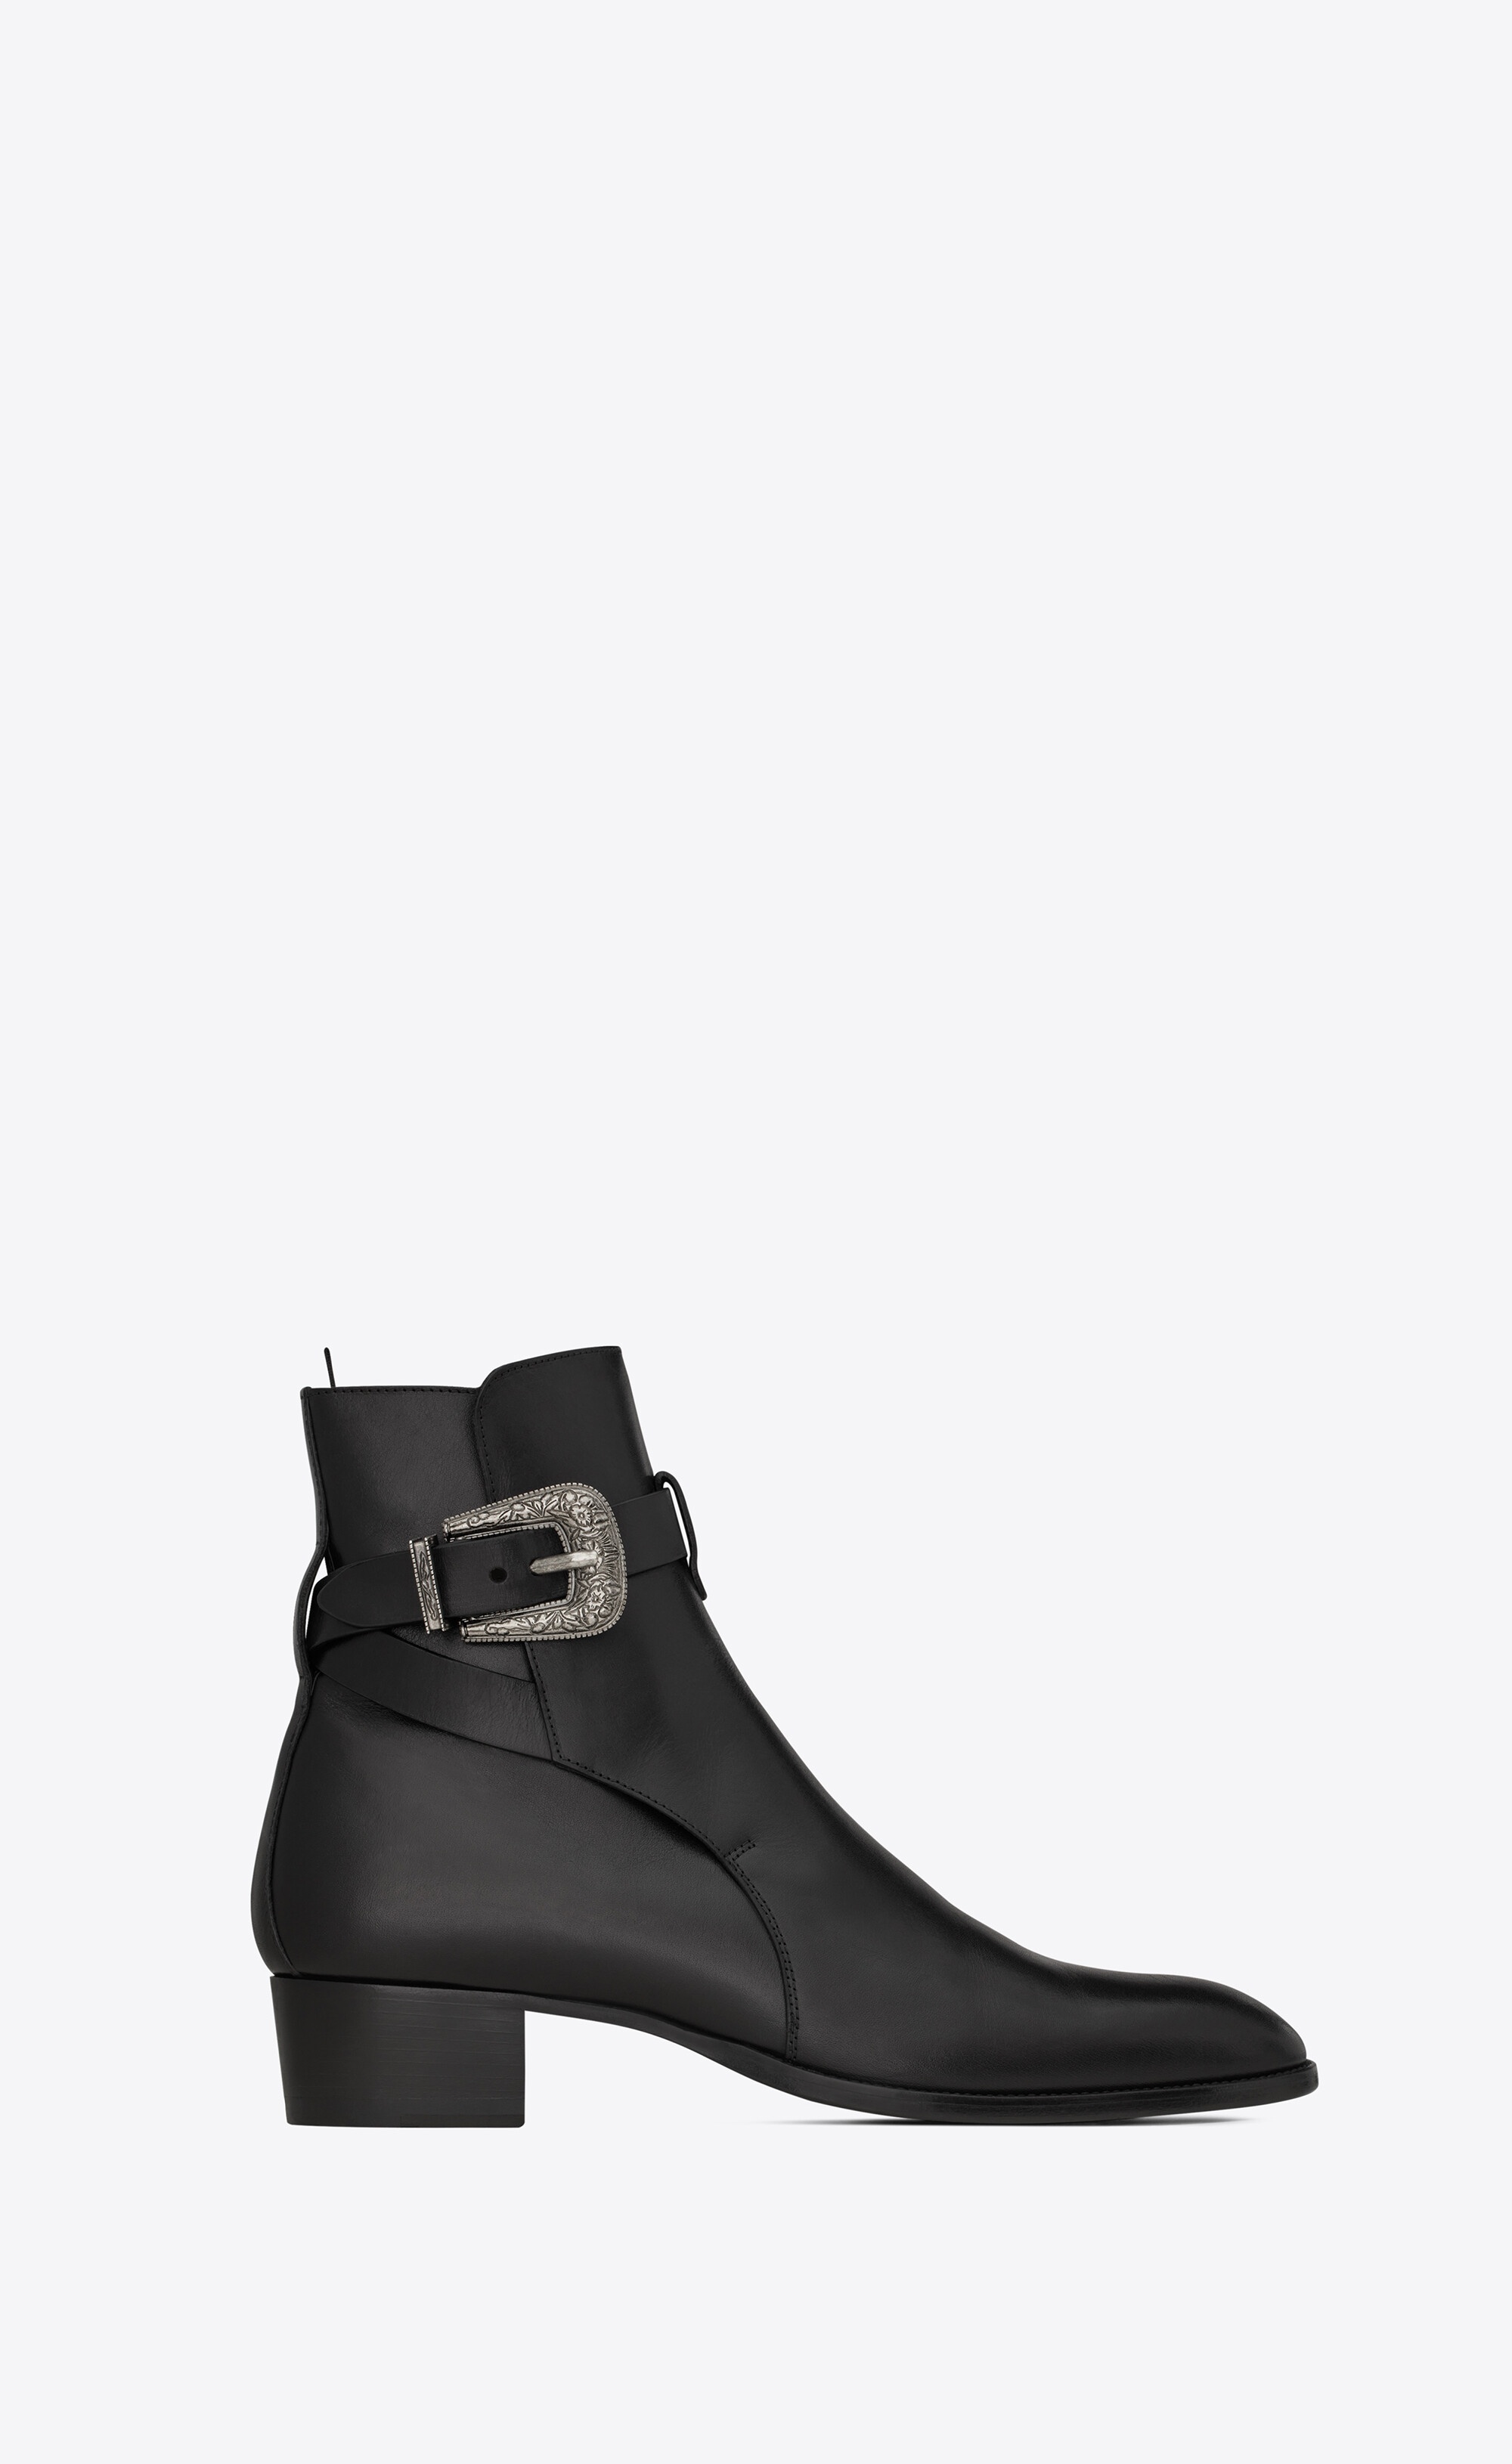 wyatt jodhpur boots in smooth leather - 1